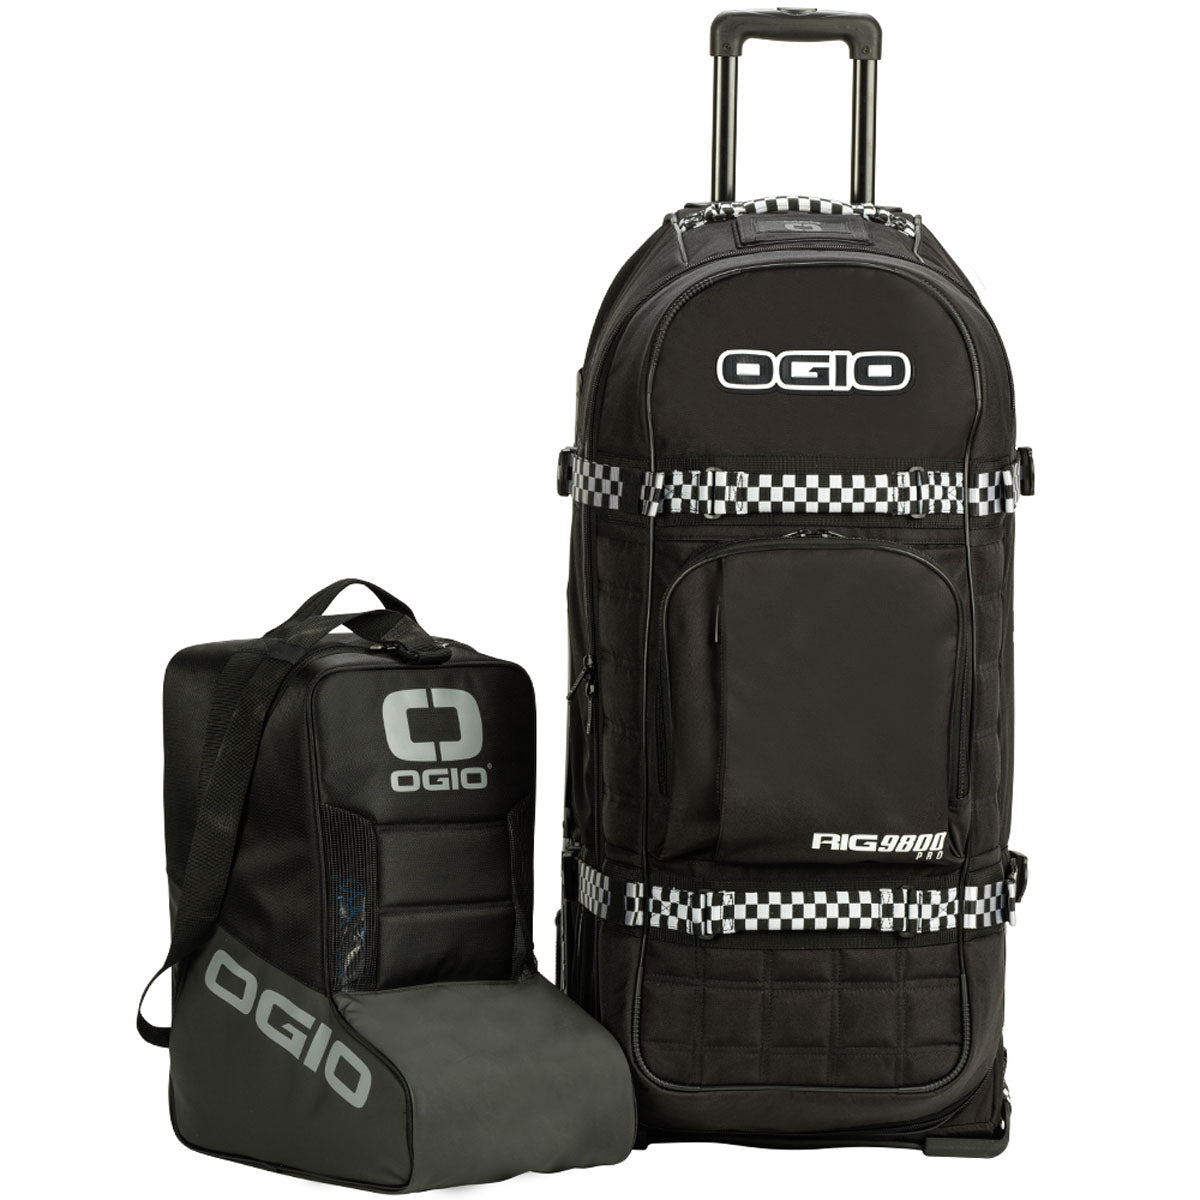 Ogio Rig 9800 Pro Gear Bag  - Fast Times - ExtremeSupply.com